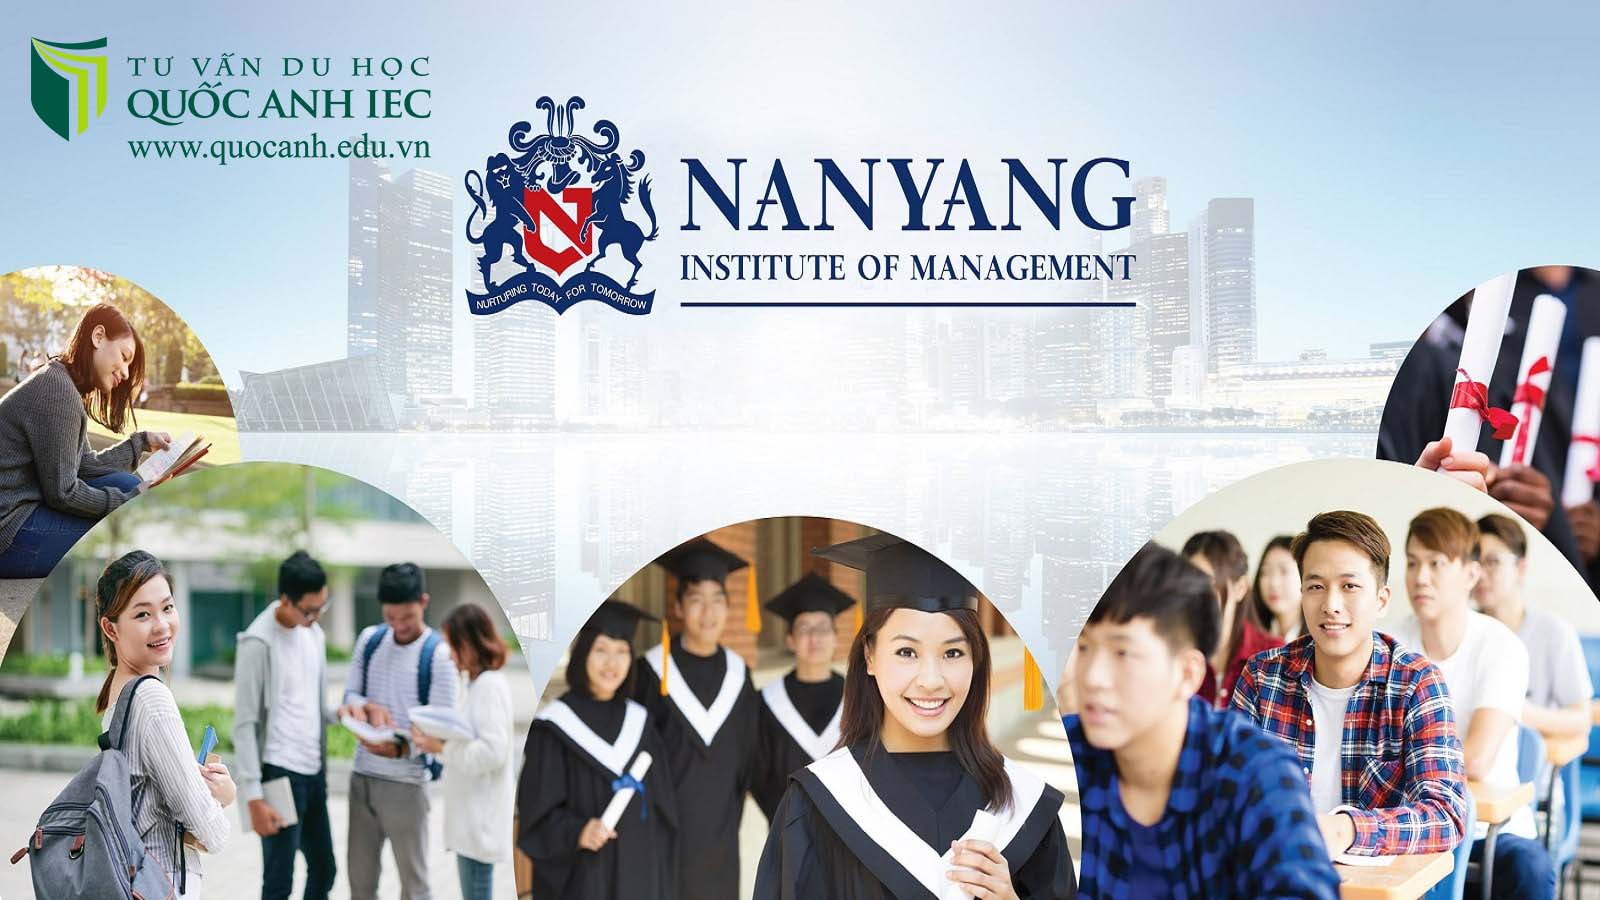 Nanyang Institute of Management